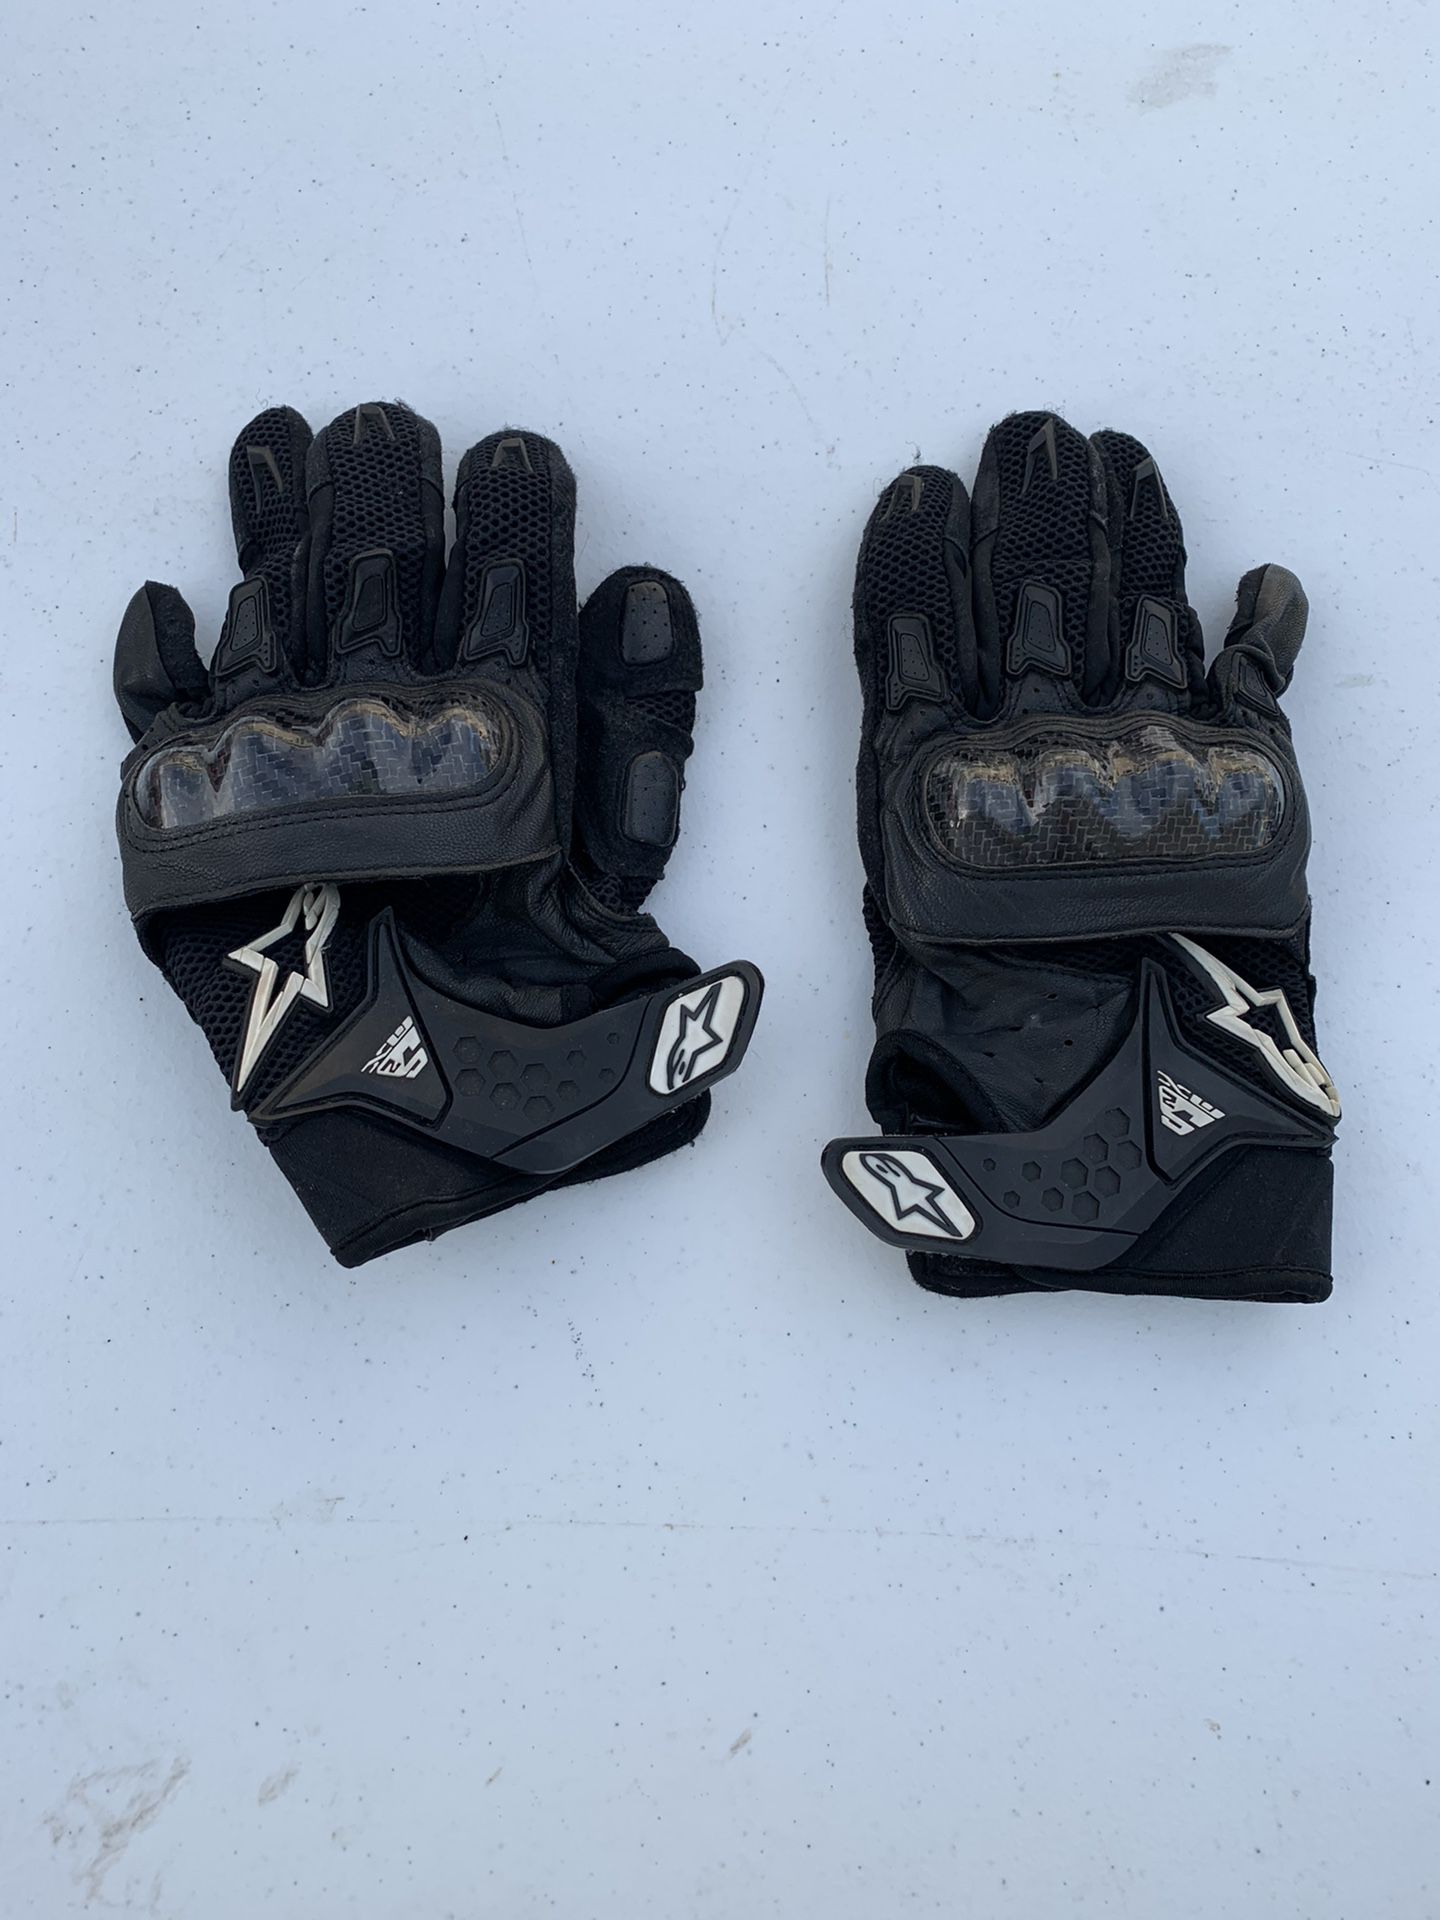 Alpine stars motorcycle gloves. #yamaha #kawasaki